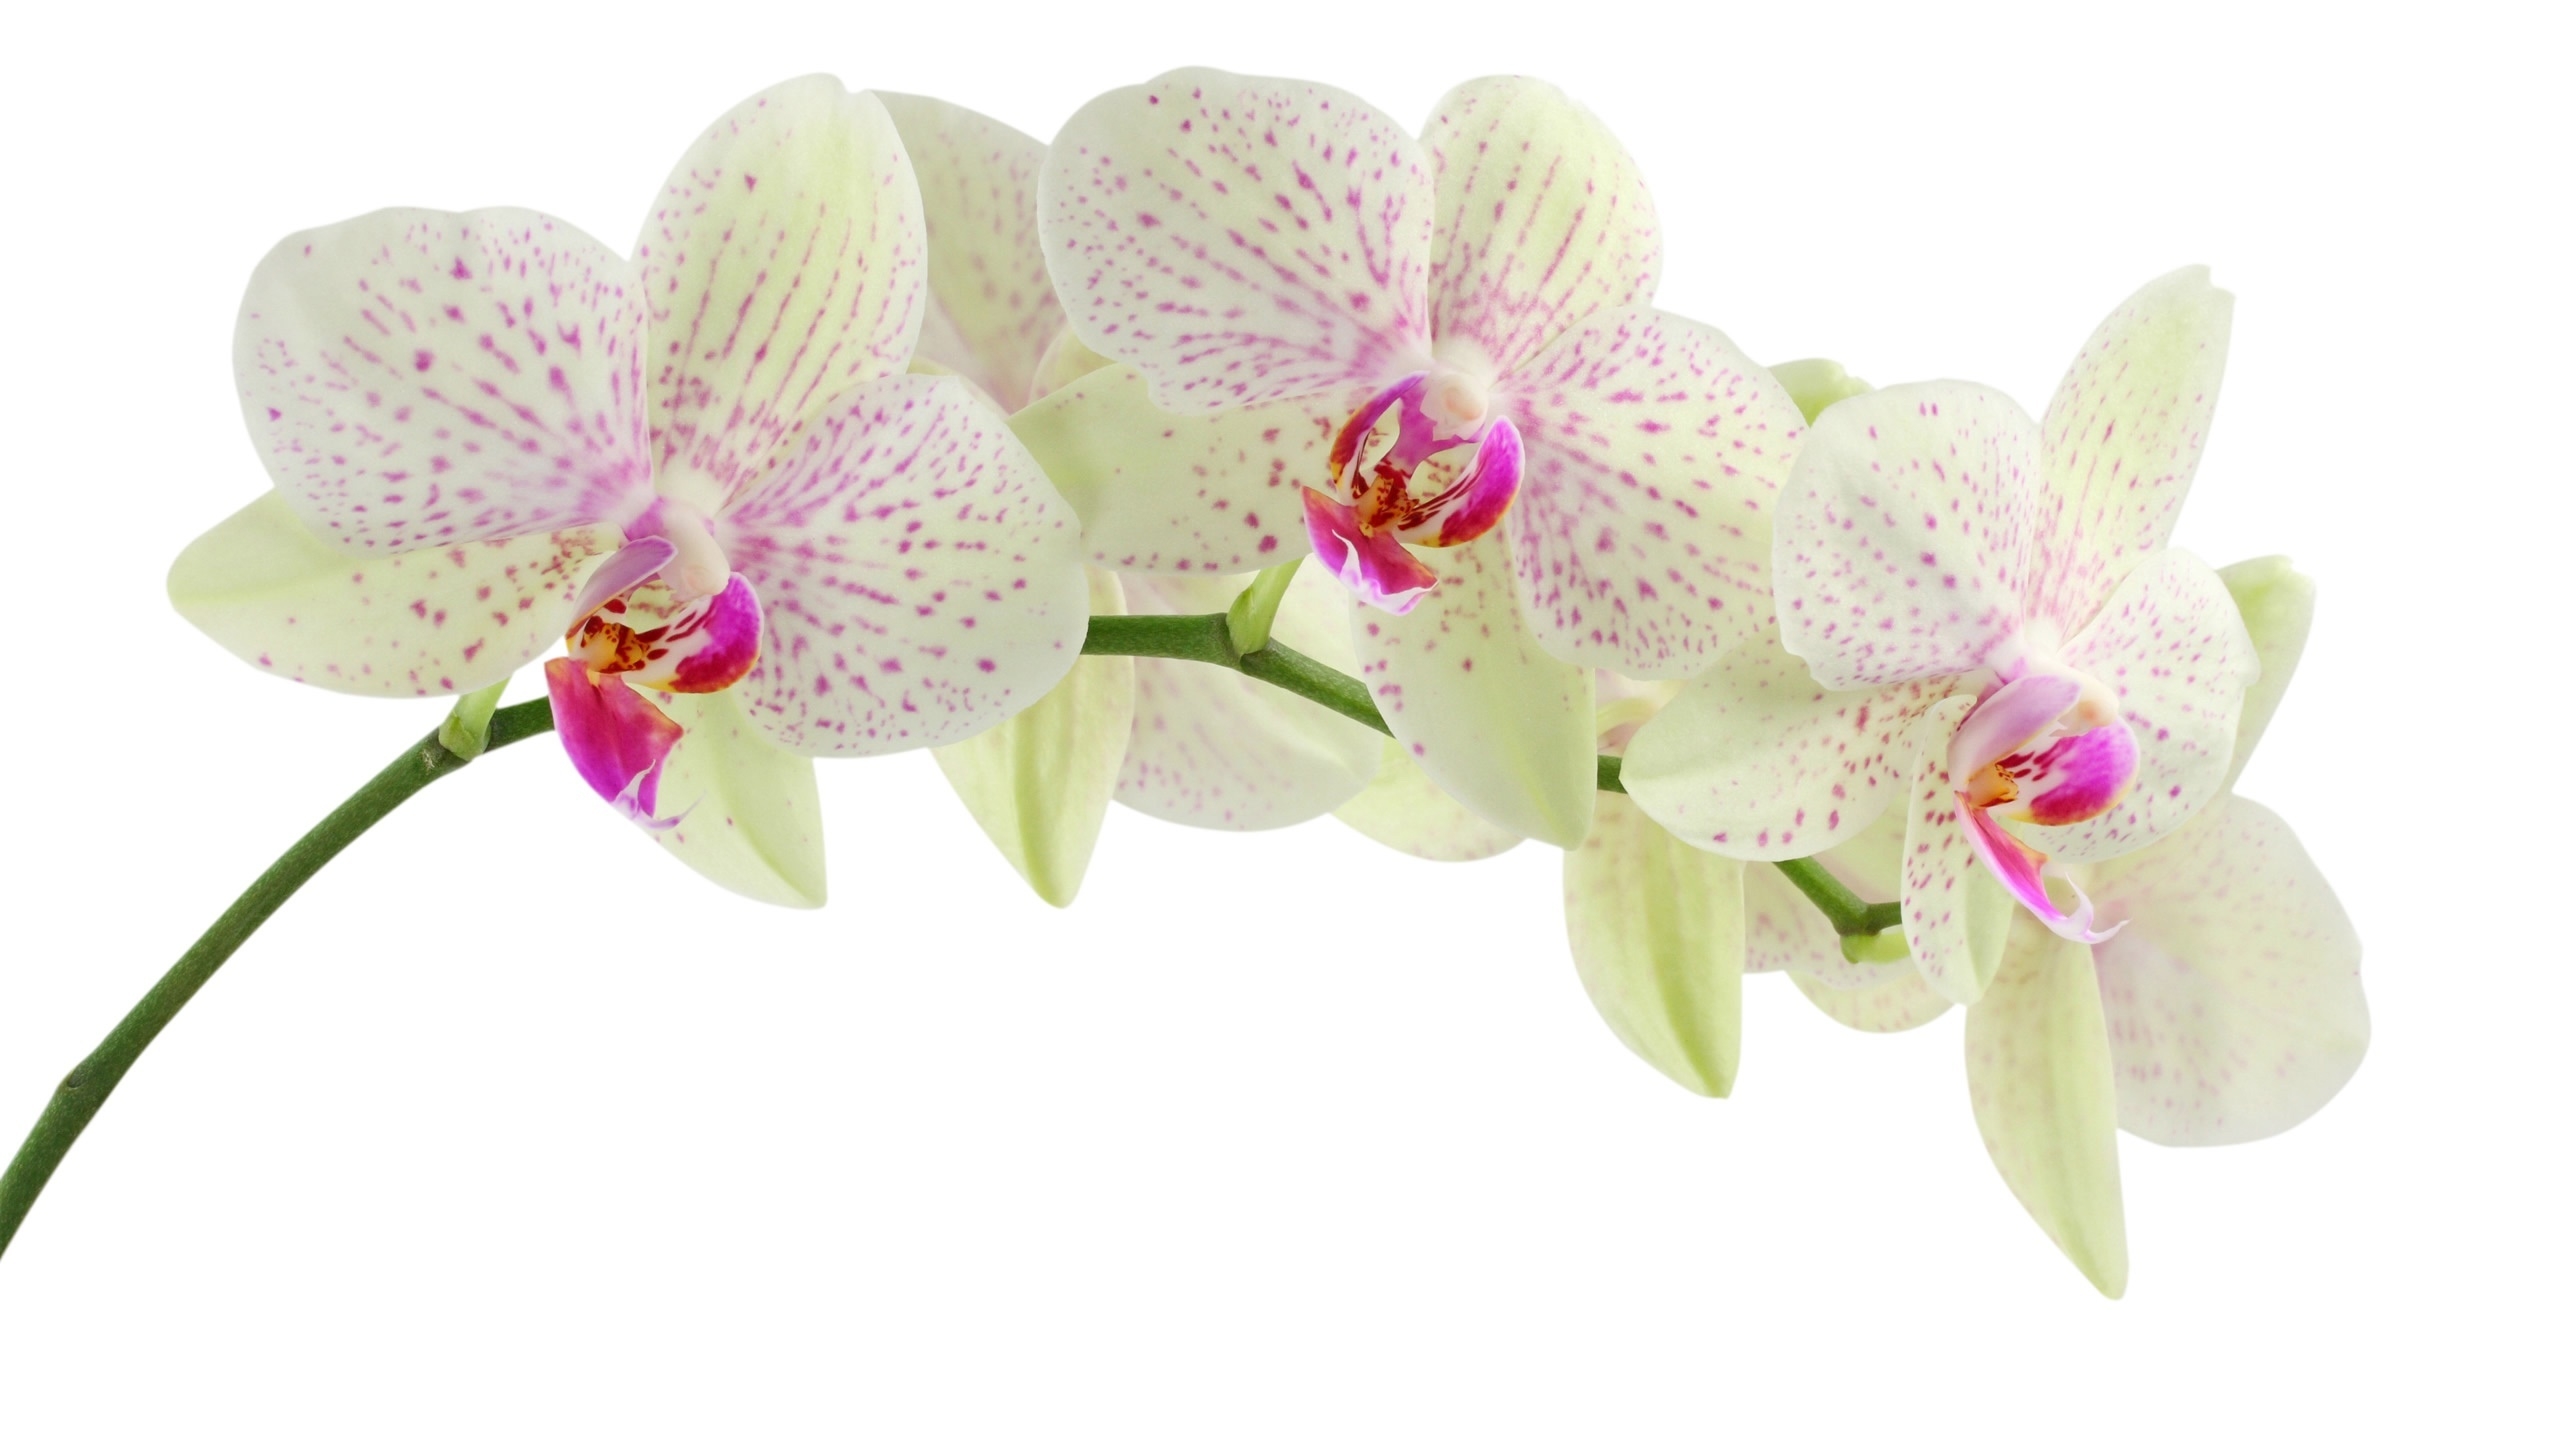 White Orchid Flower for 2560x1440 HDTV resolution